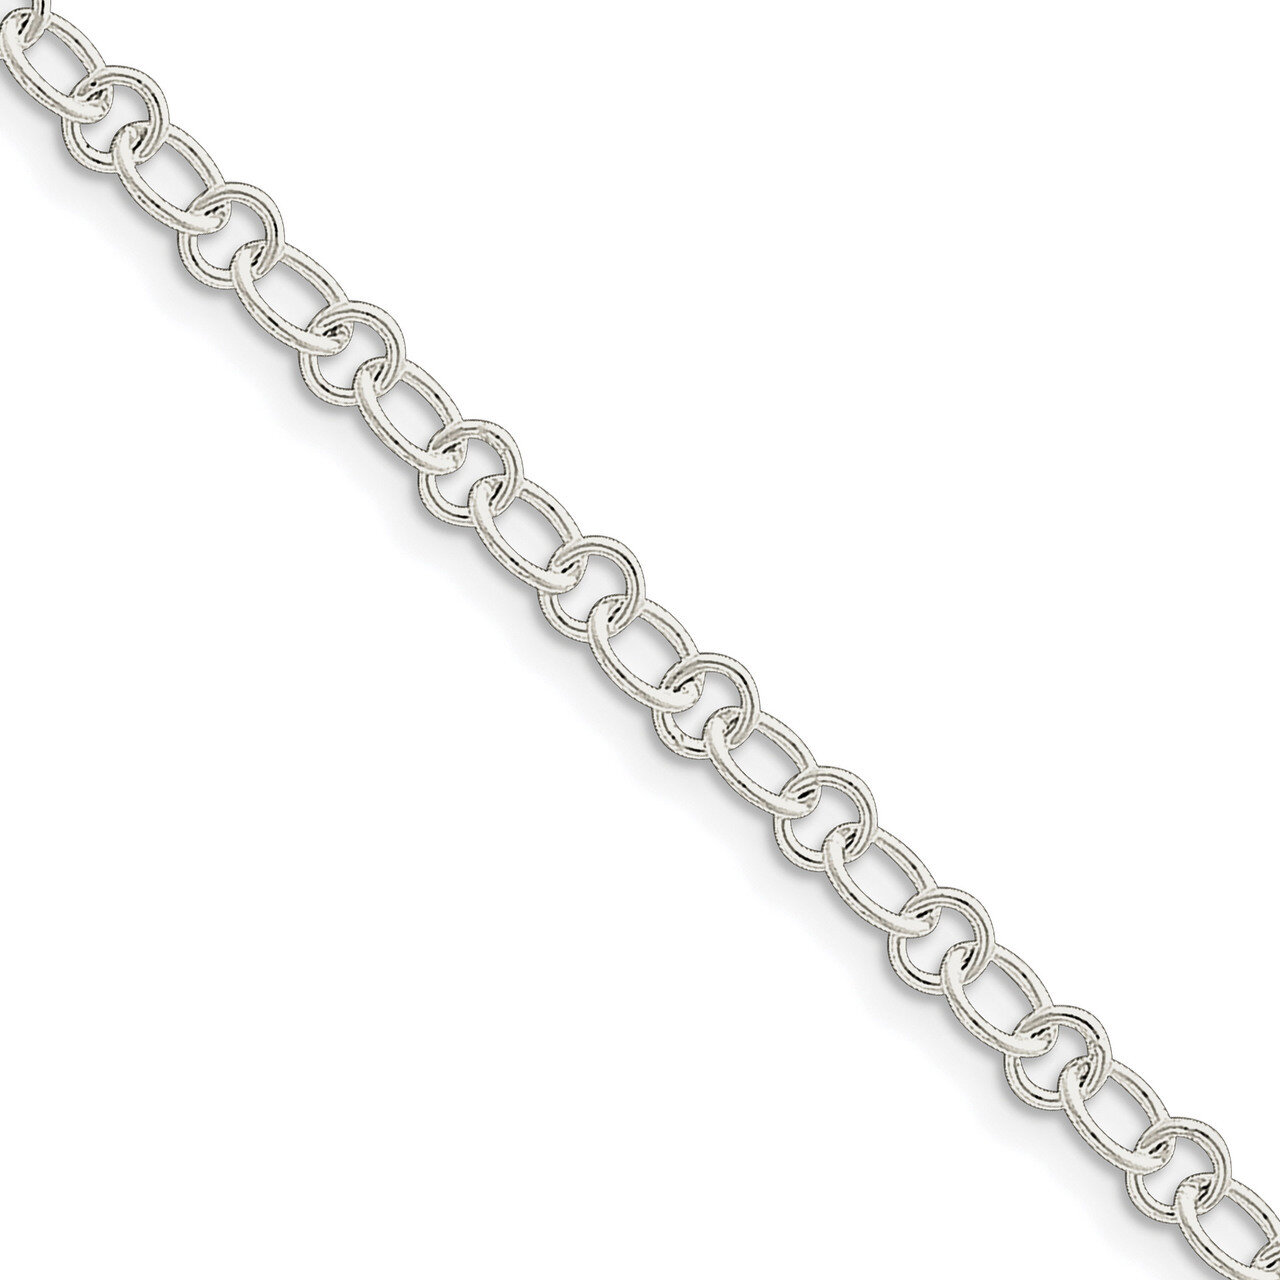 Bracelet 6.5 Inch Sterling Silver QG2236-6.5